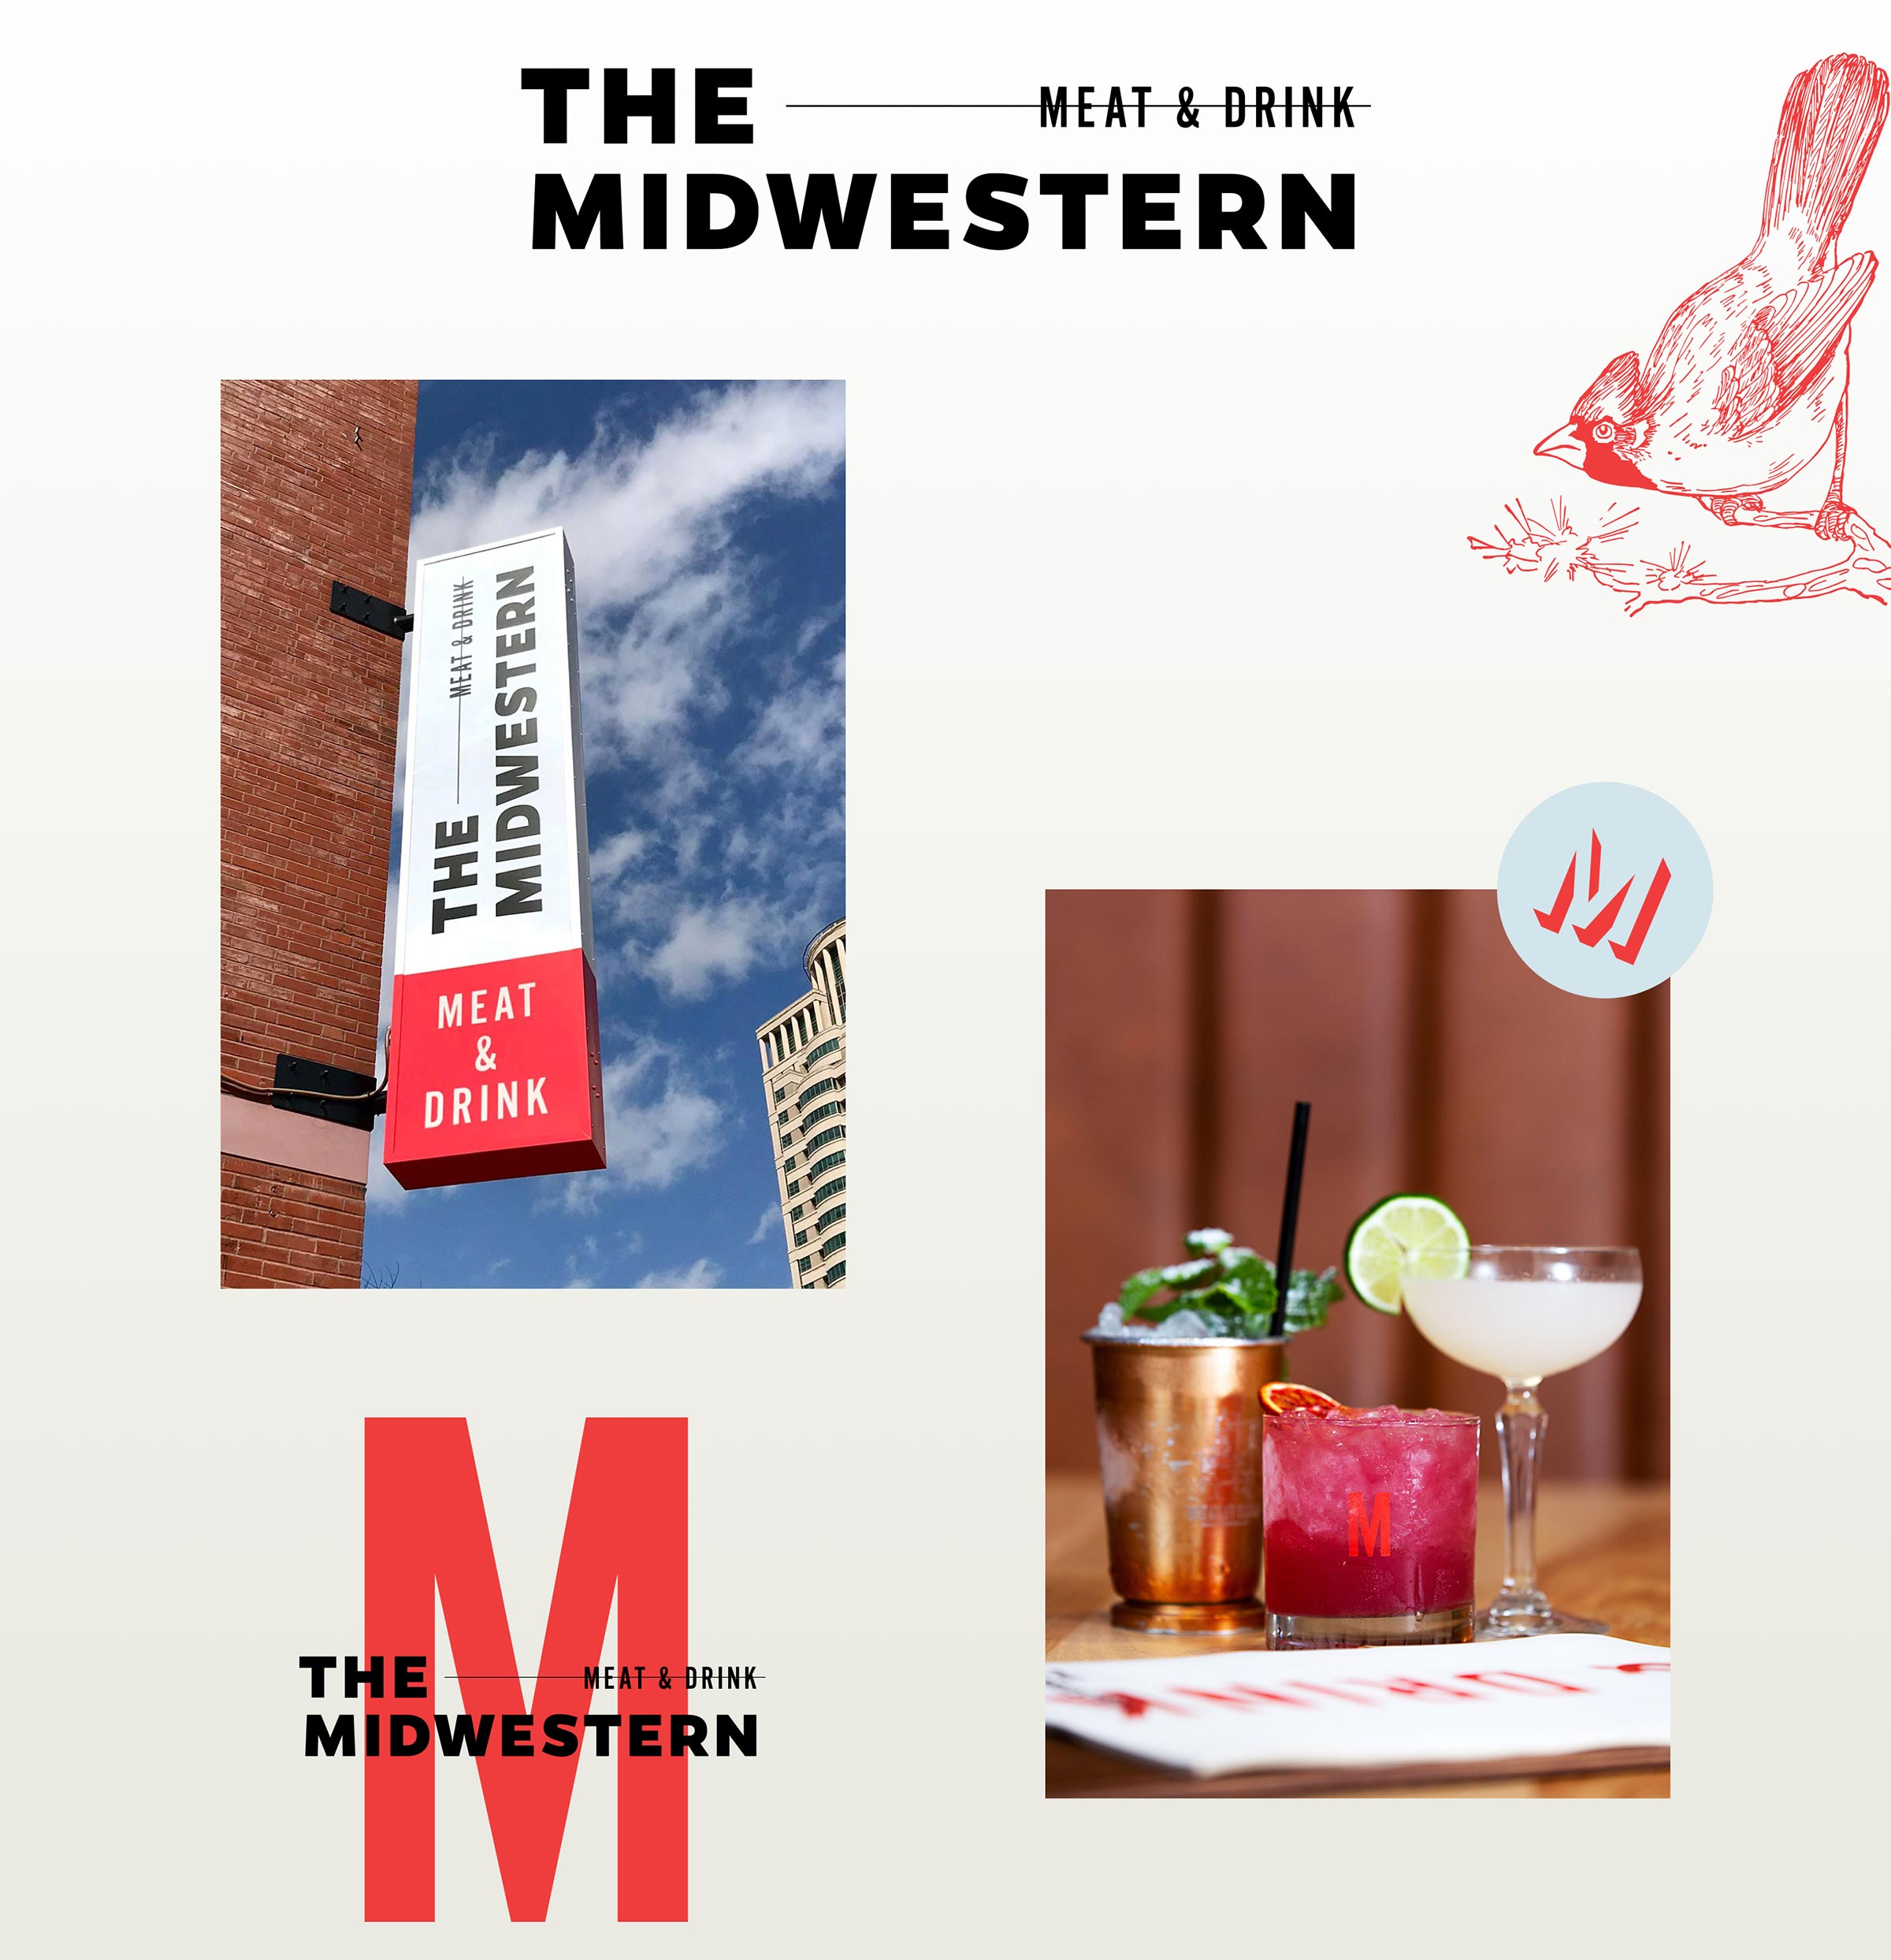 Midwestern - Restaurant branding logos, outdoor blade sign, cocktail glasses